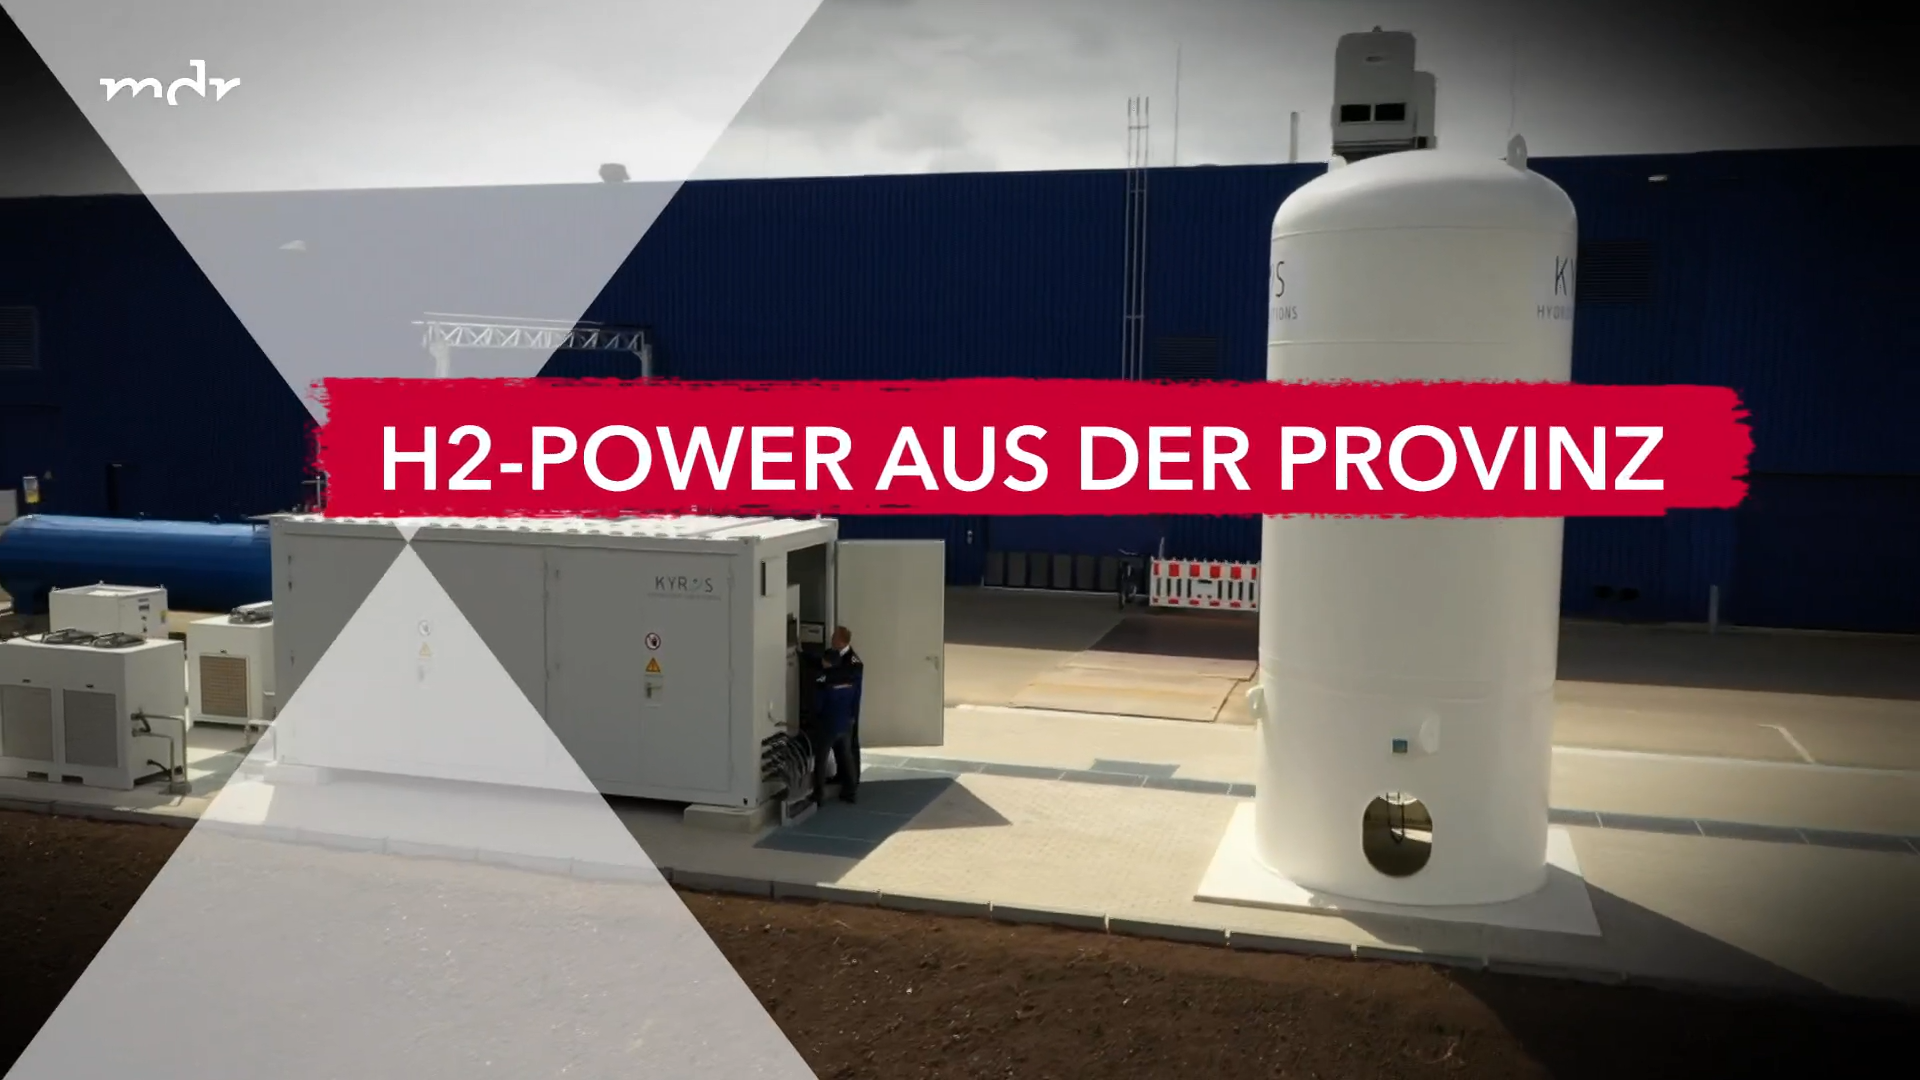 H2-Power aus der Provinz (Quelle: mdr.de)